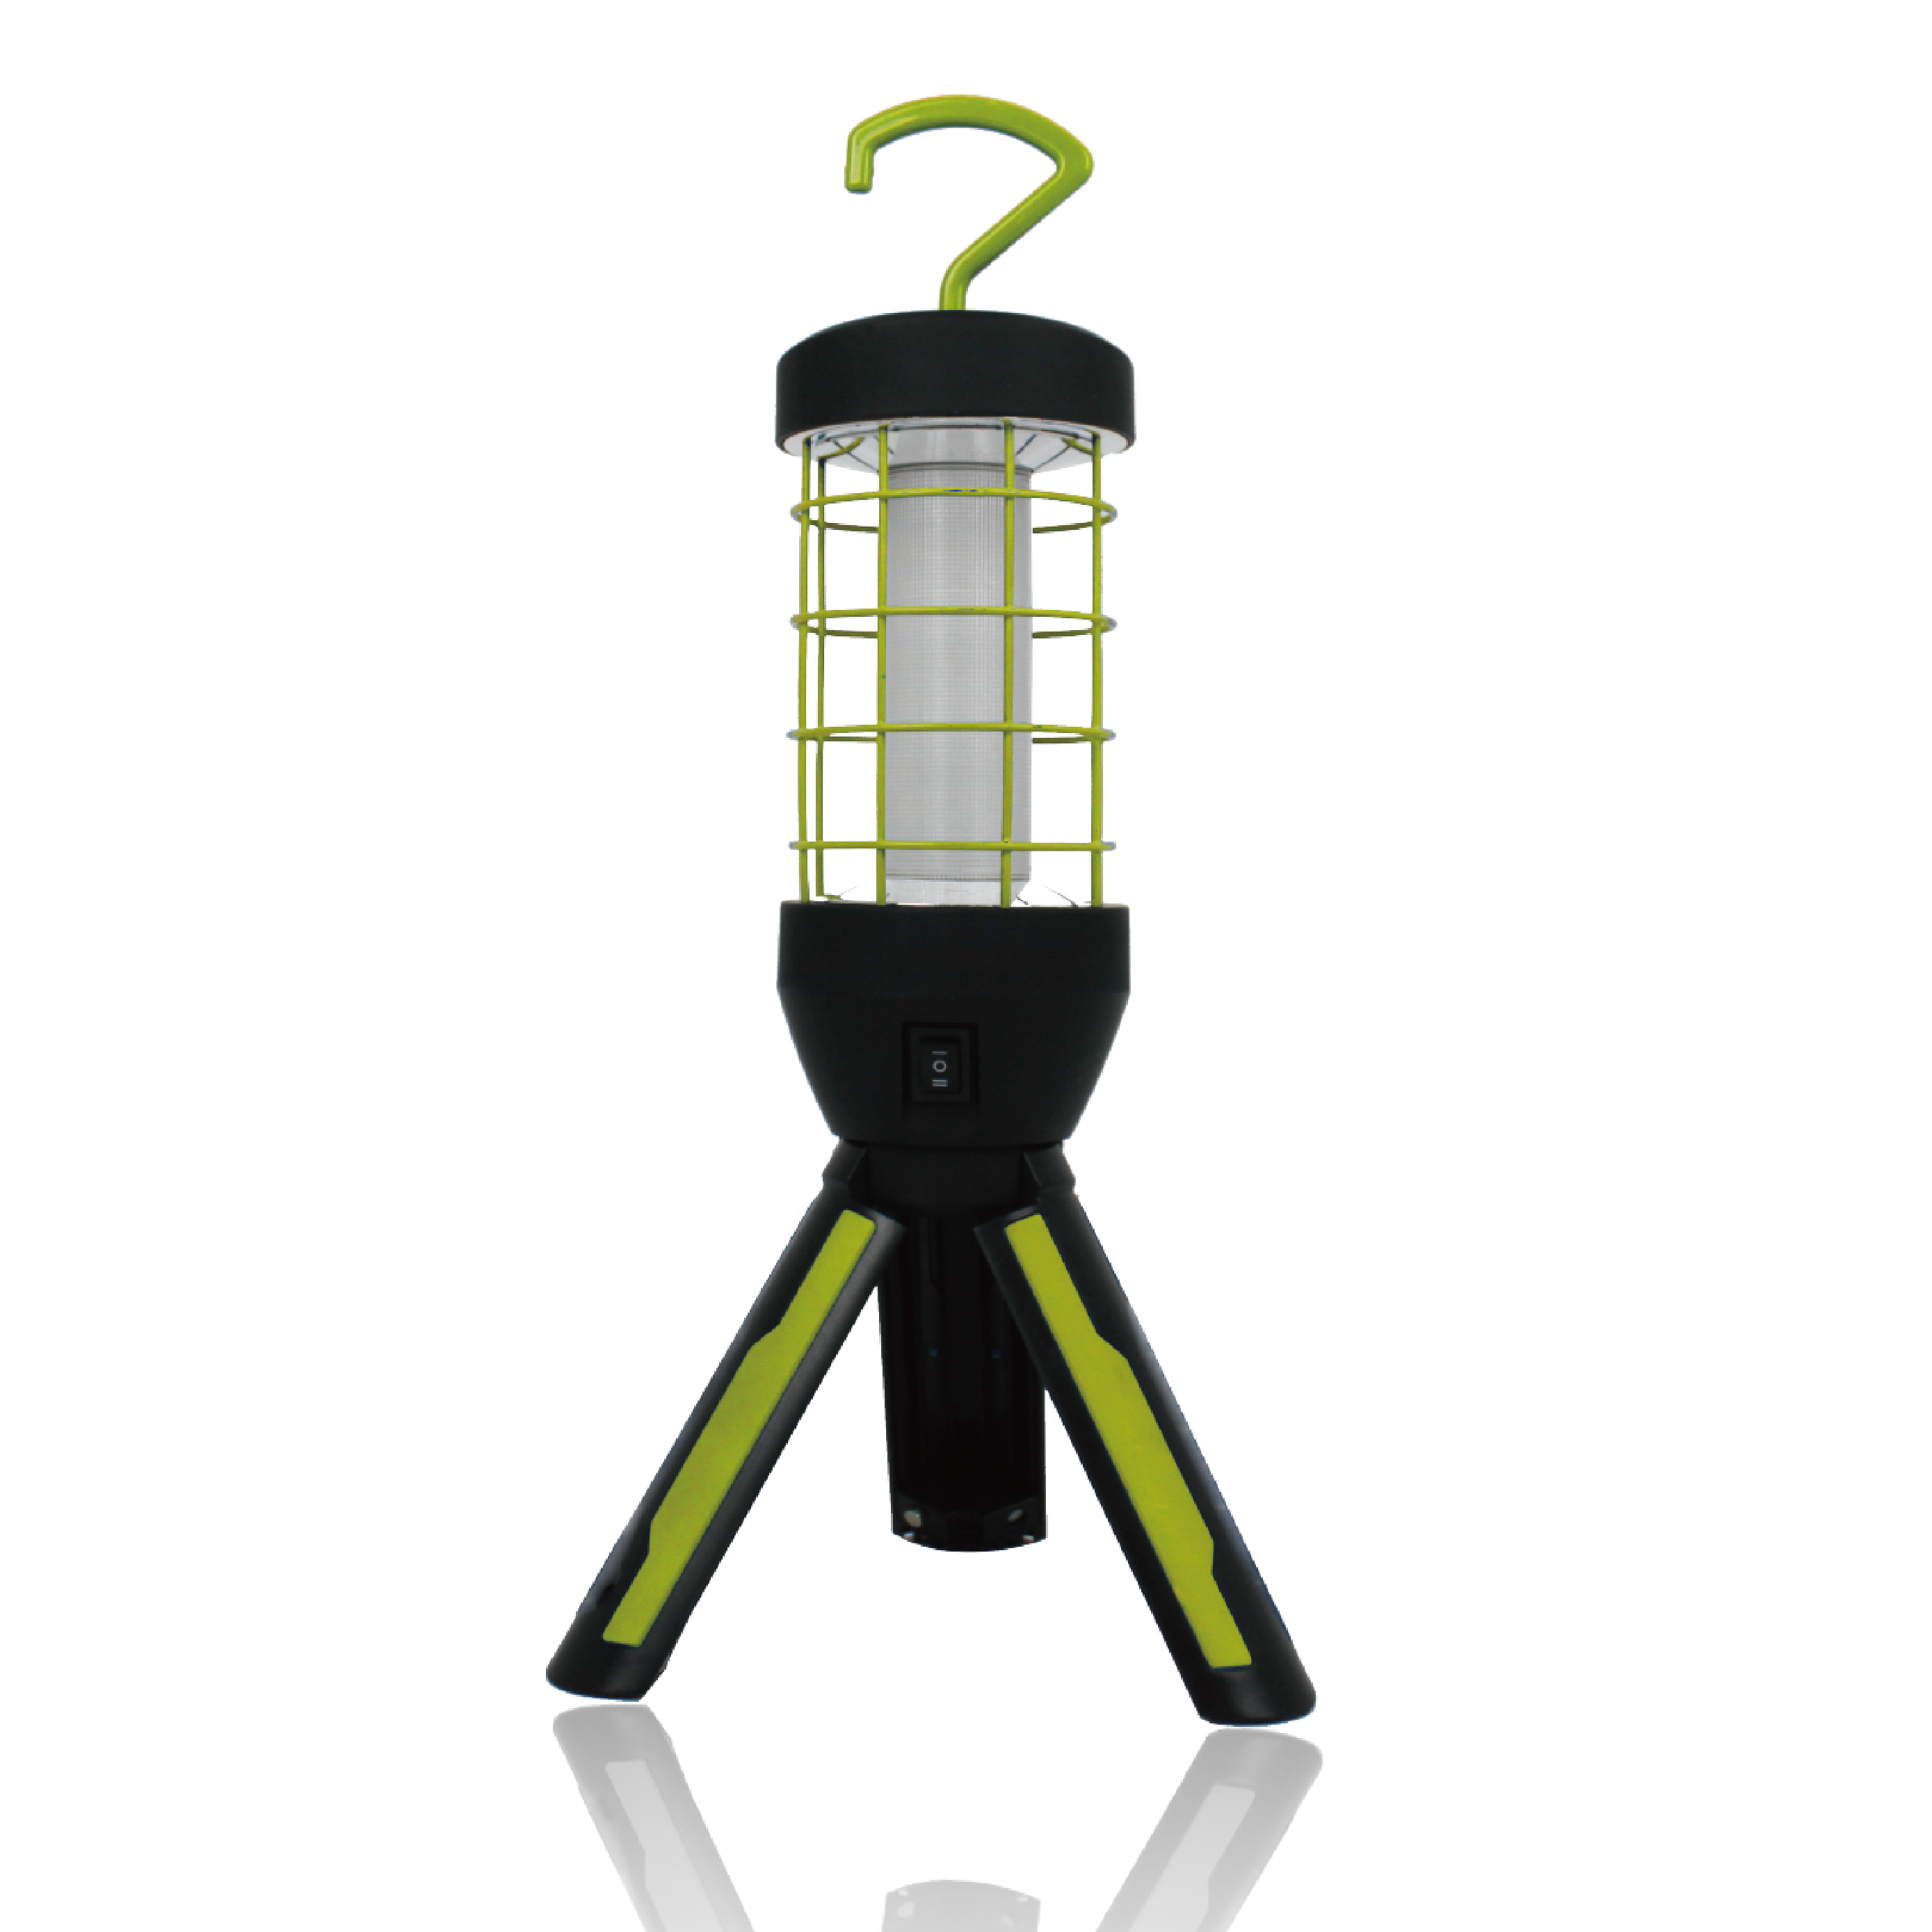 Rechargebale 800 Lumen LED Tripod Lantern & Worklight